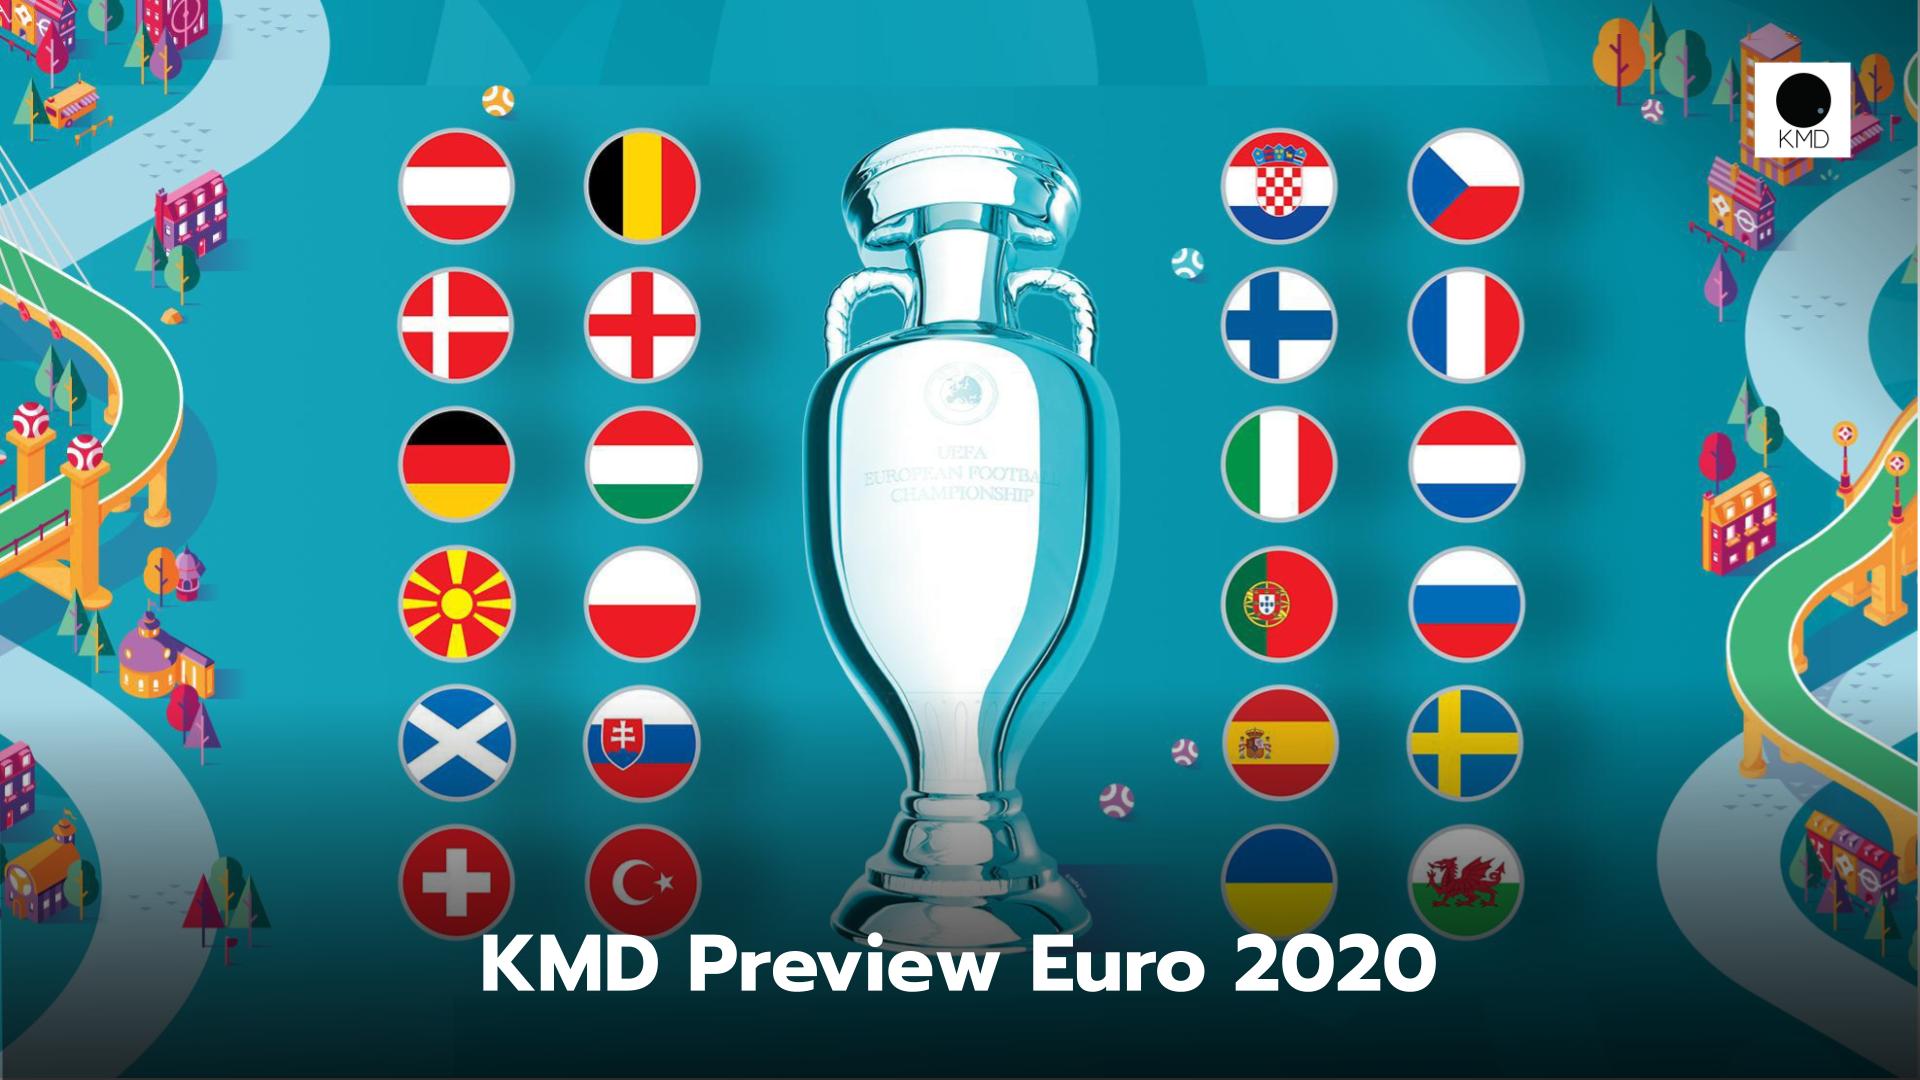 Www Rajwap Dot Com Online - KMD Preview Euro 2020 - Khaimukdam